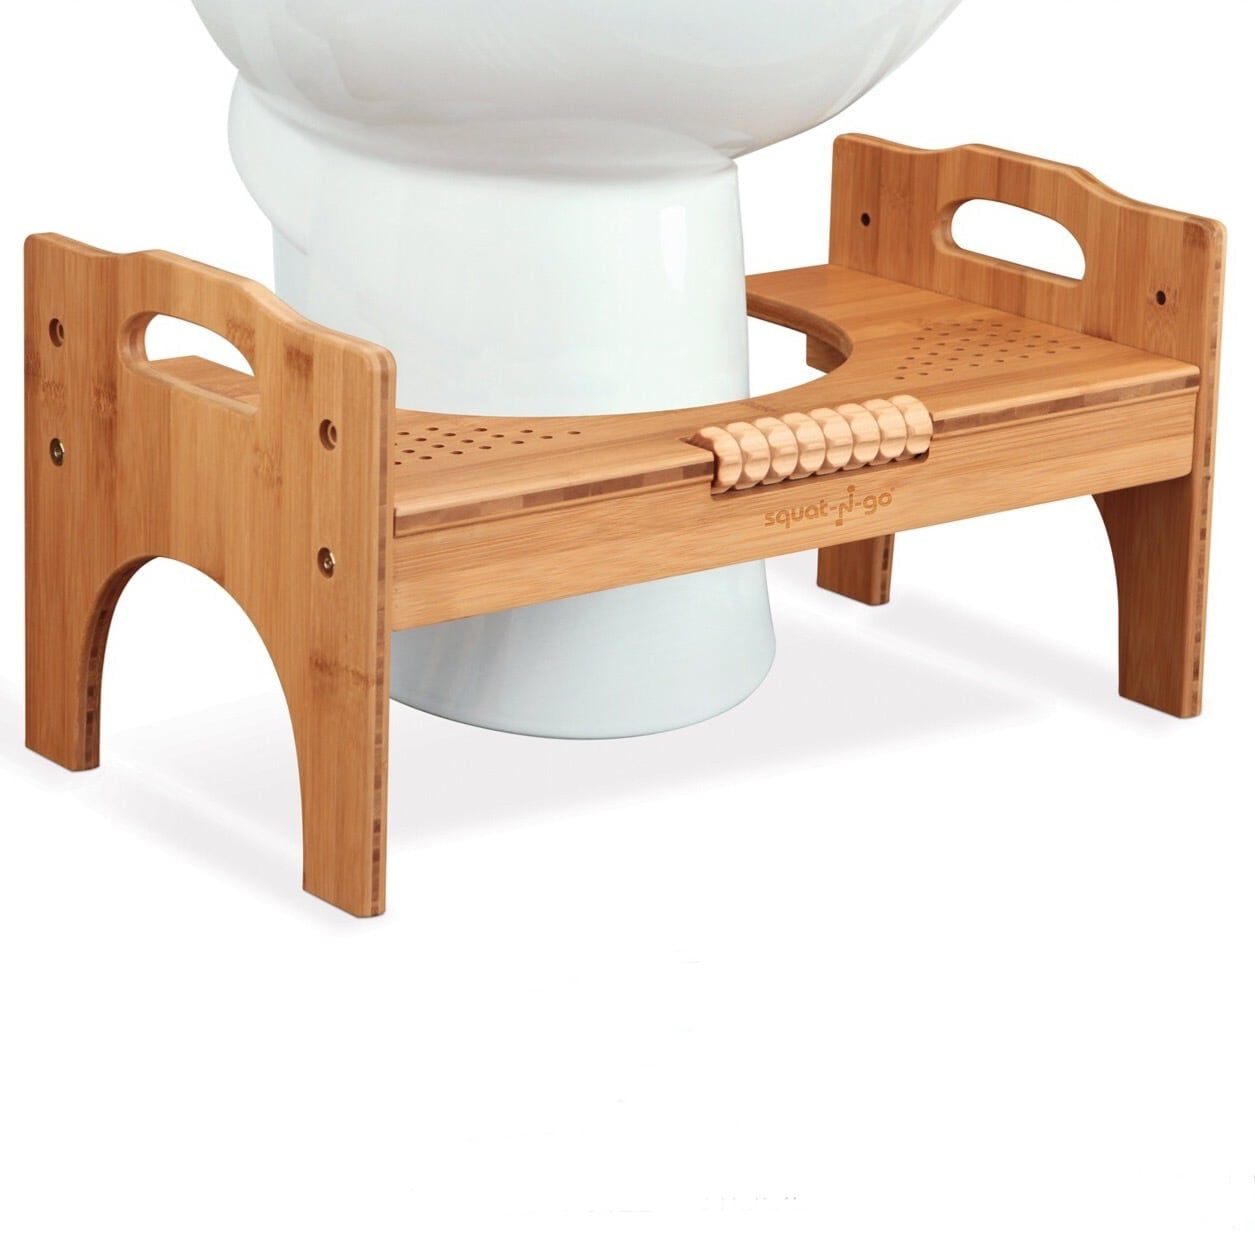 squat stool